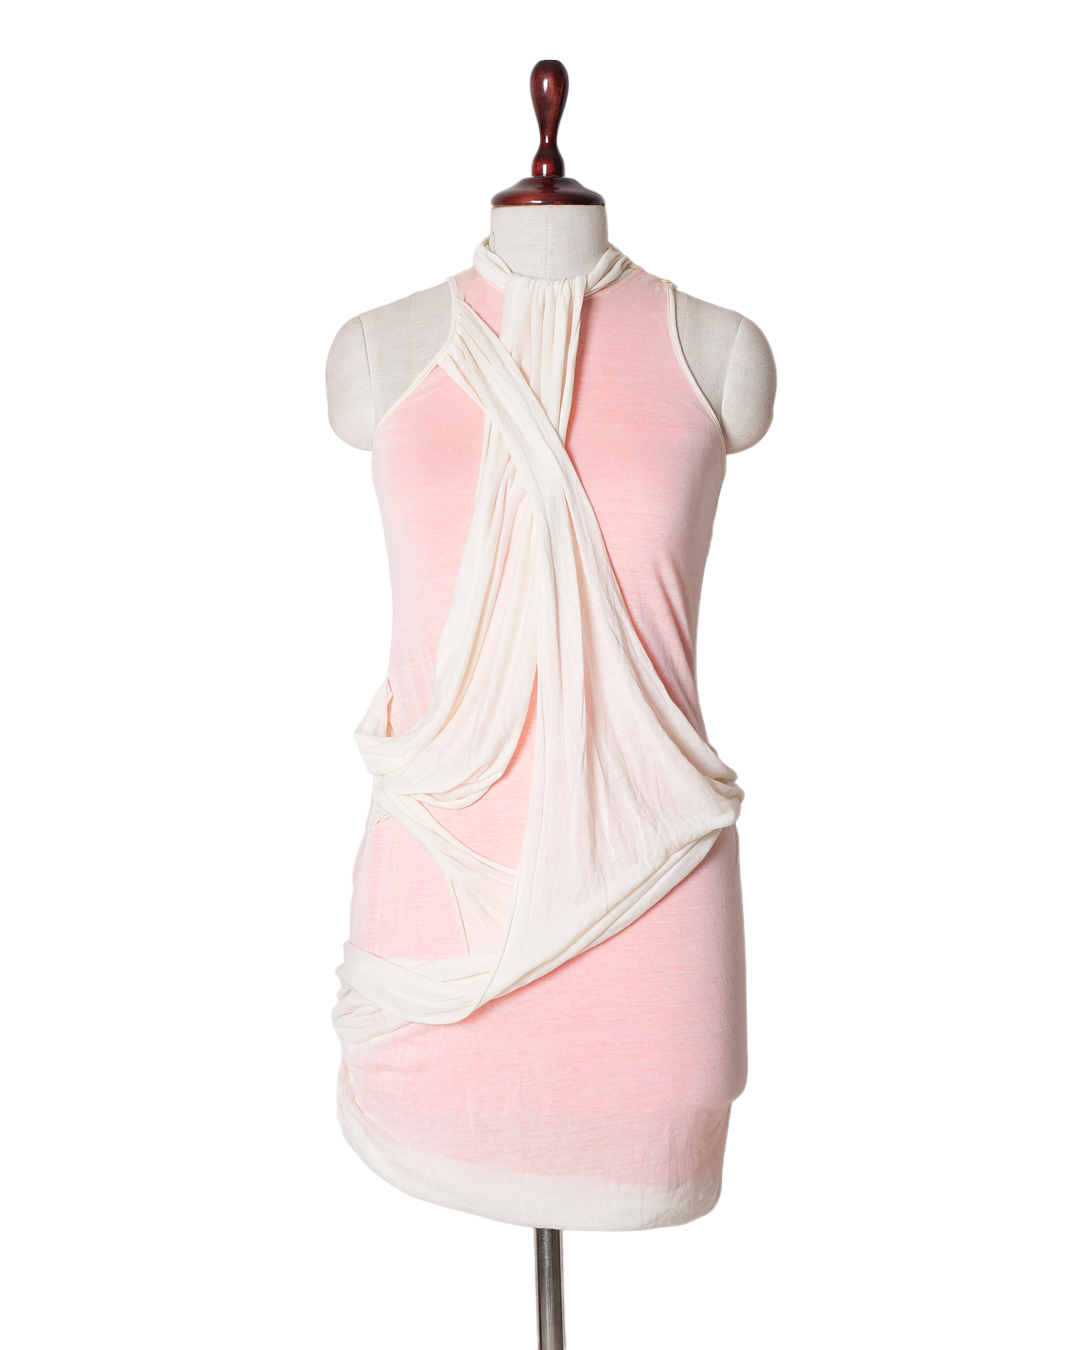 File:Dress by Alexander McQueen, Savage Beauty exhibition.jpg - Wikipedia